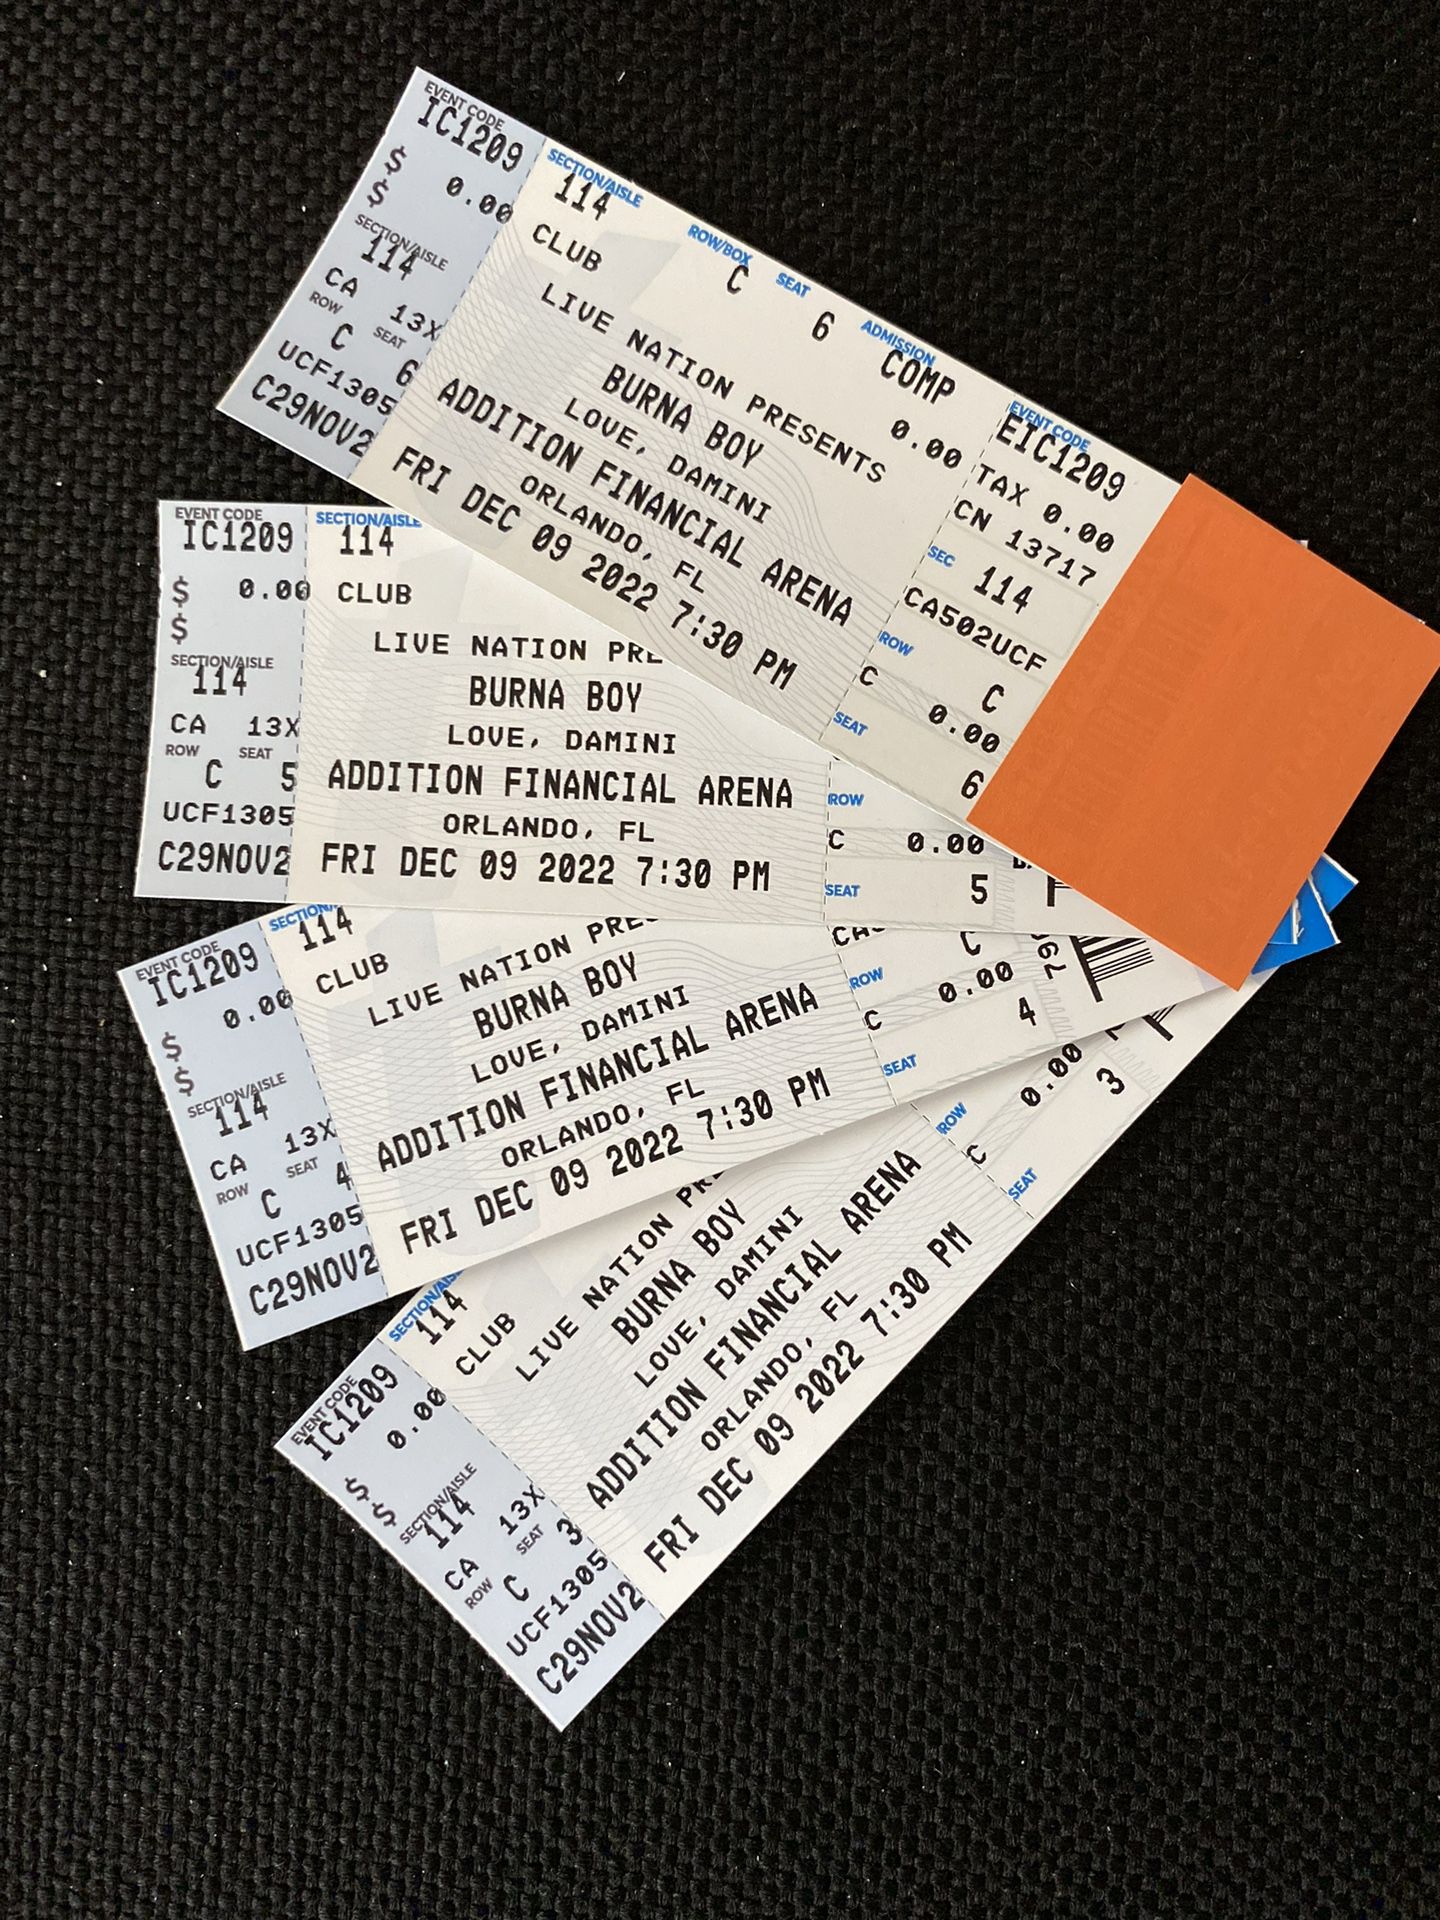 Burna Boy Concert (4)Tickets (4). Additional Financial Arena DECEMBER 9 UCF 